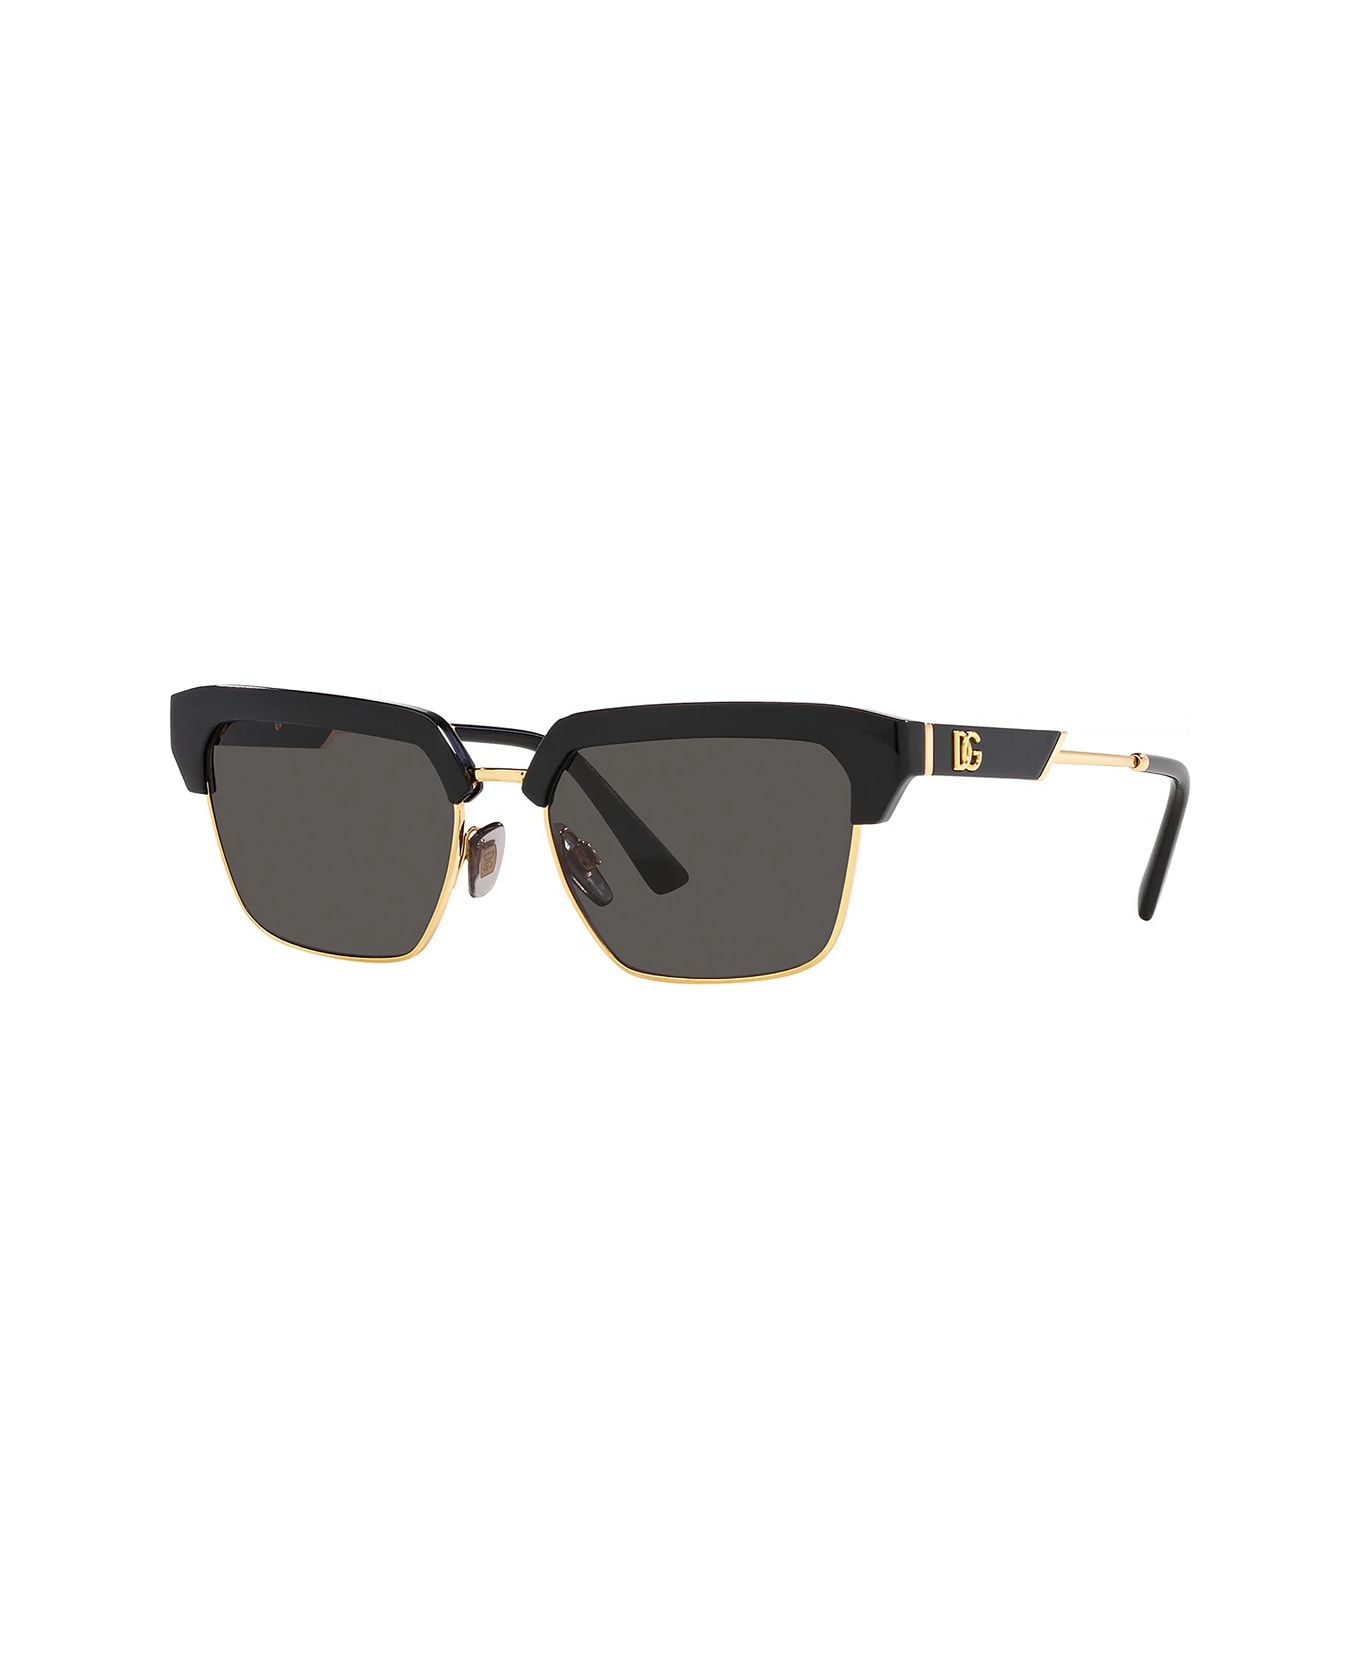 Dolce & Gabbana Eyewear Dg6185 501/87 Sunglasses - Nero